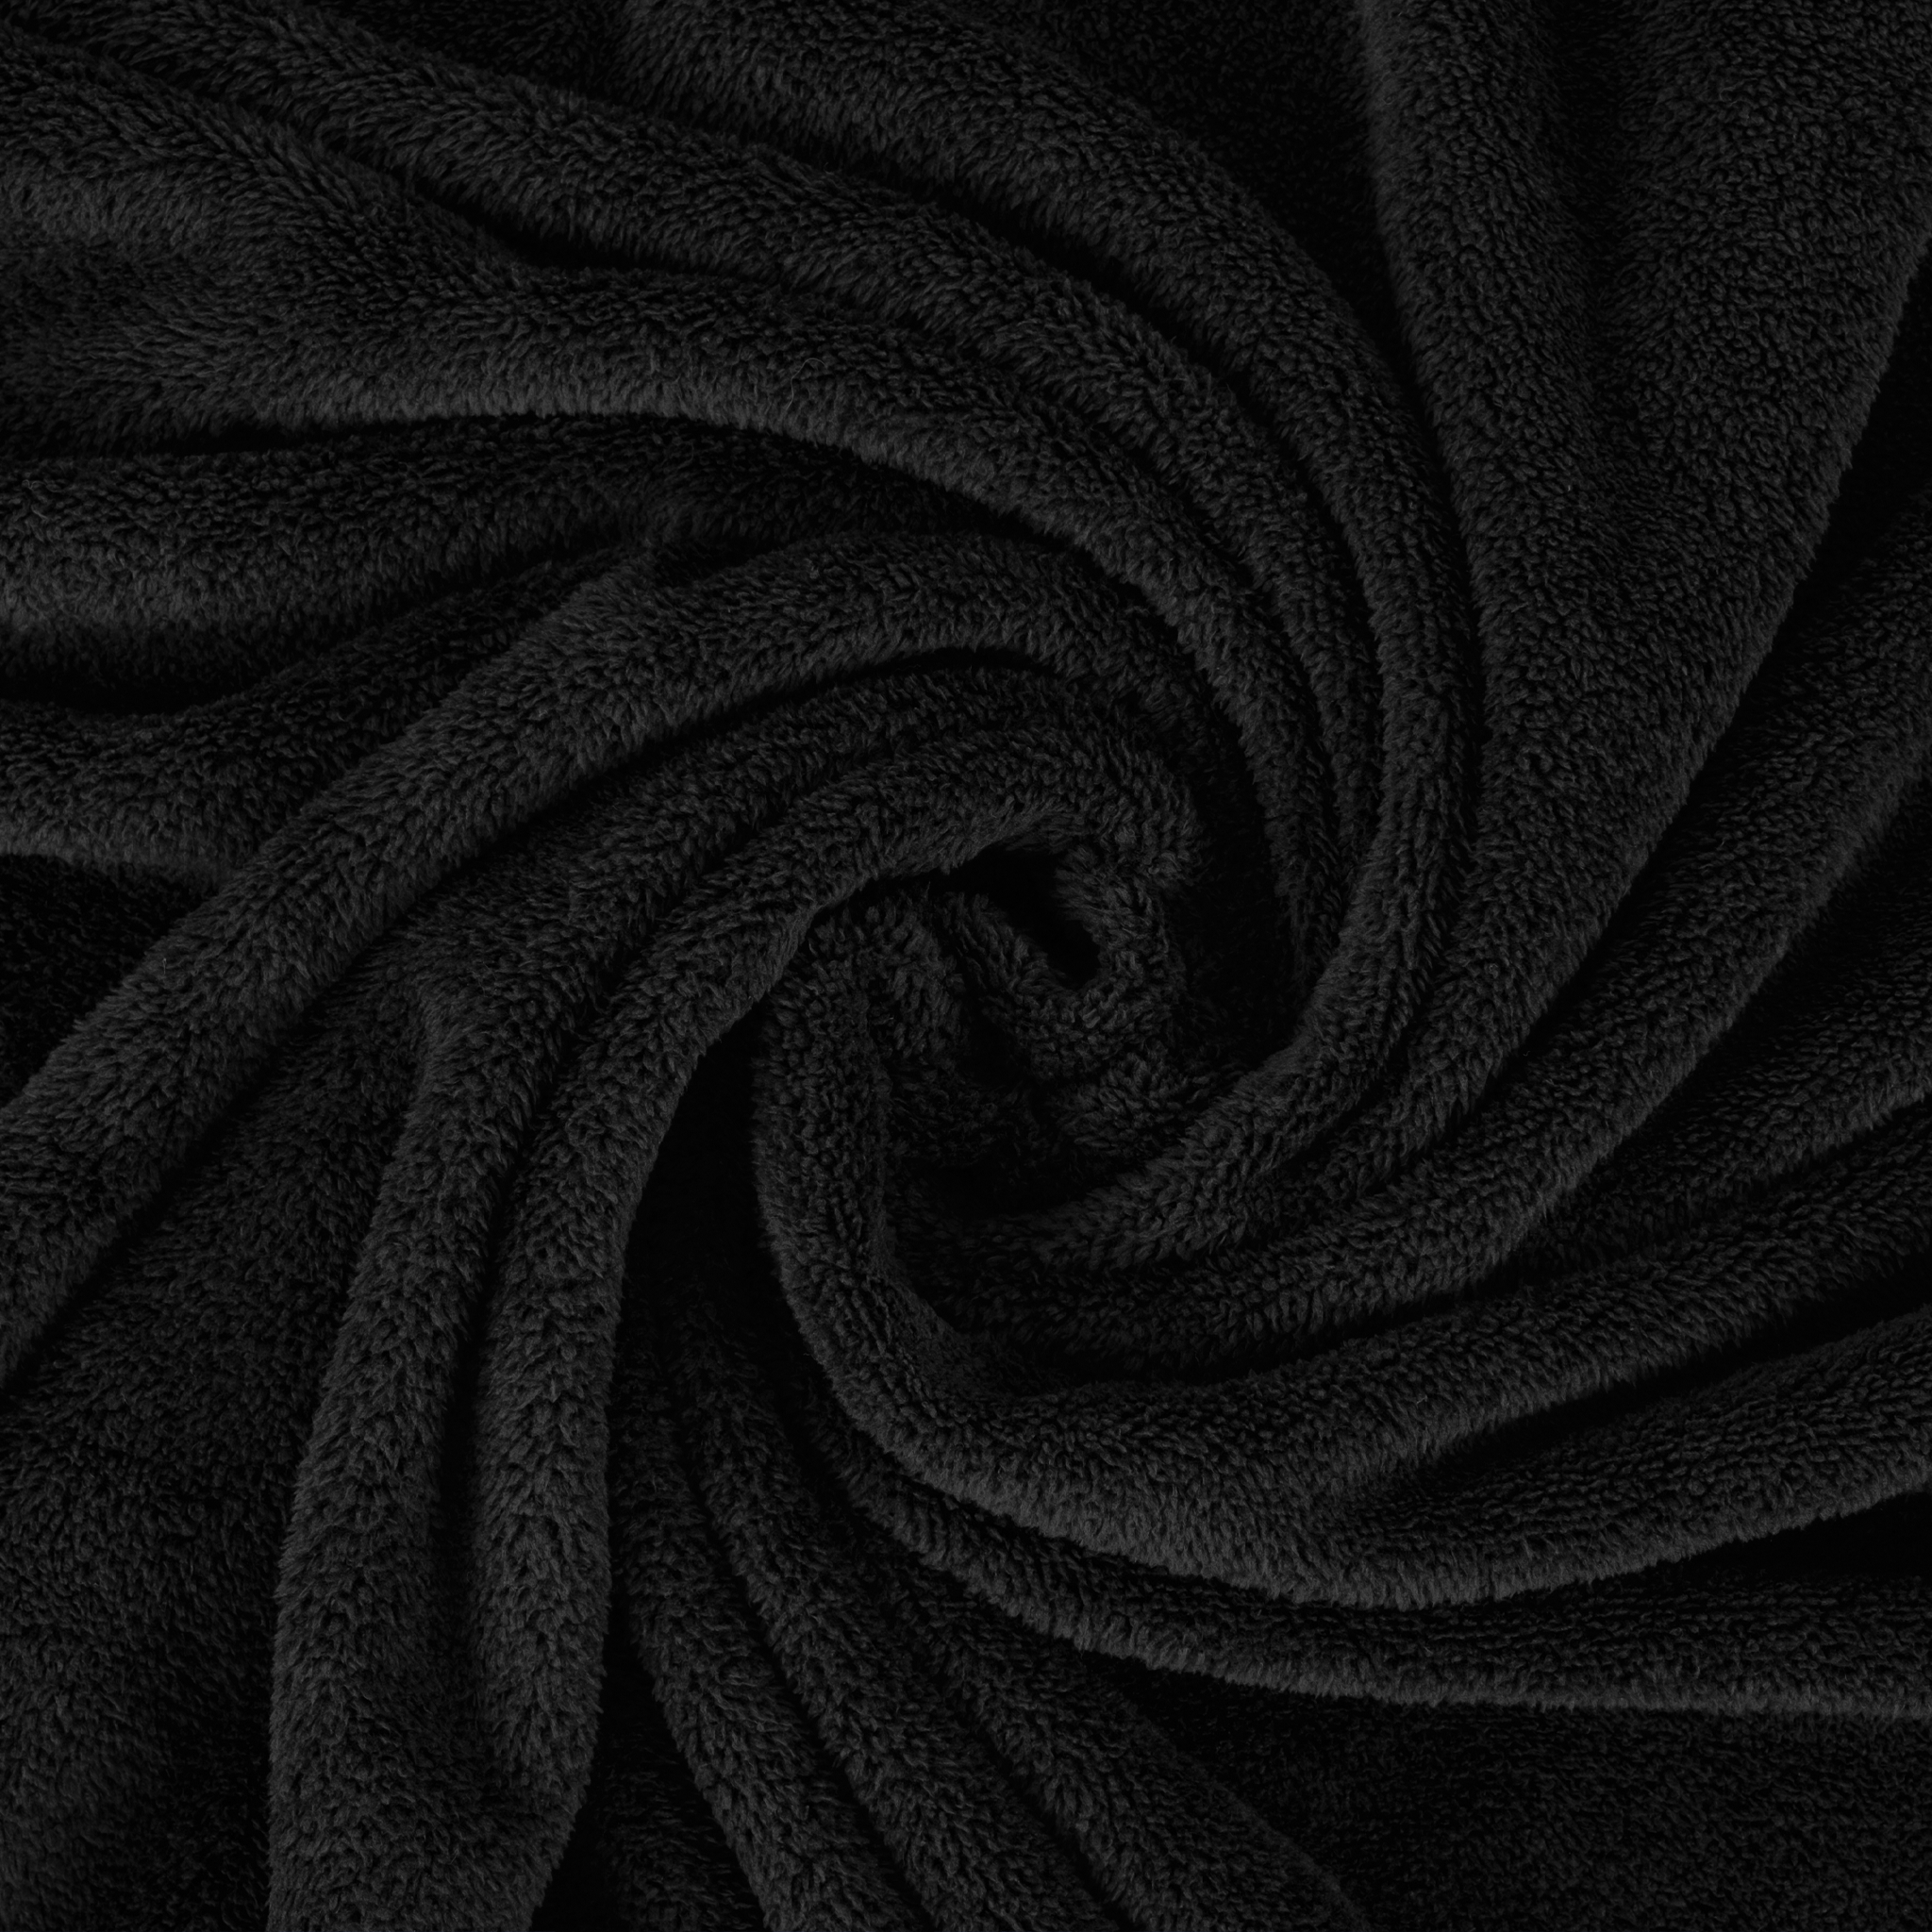 American Soft Linen - Bedding Fleece Blanket - Throw Size 50x60 inches - Black - 5